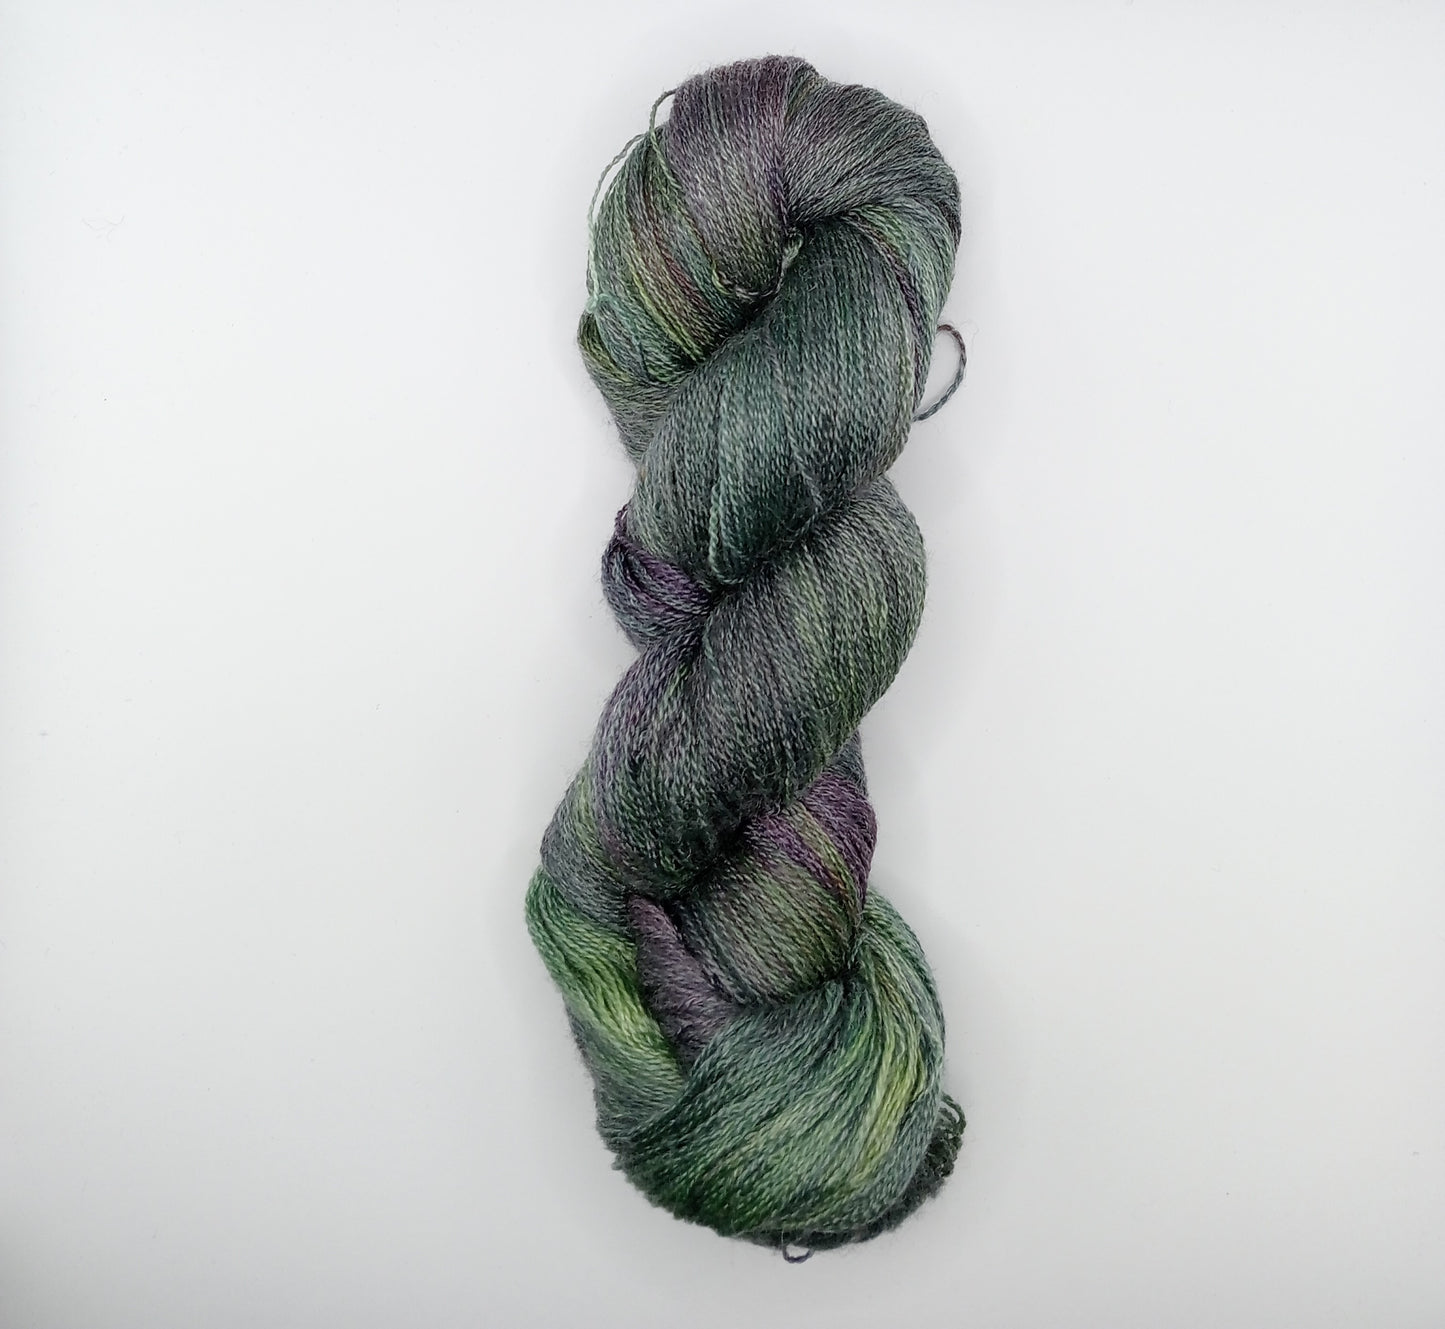 100G Merino/Tencel hand dyed luxury Lace Weight Yarn - "Oceanic"